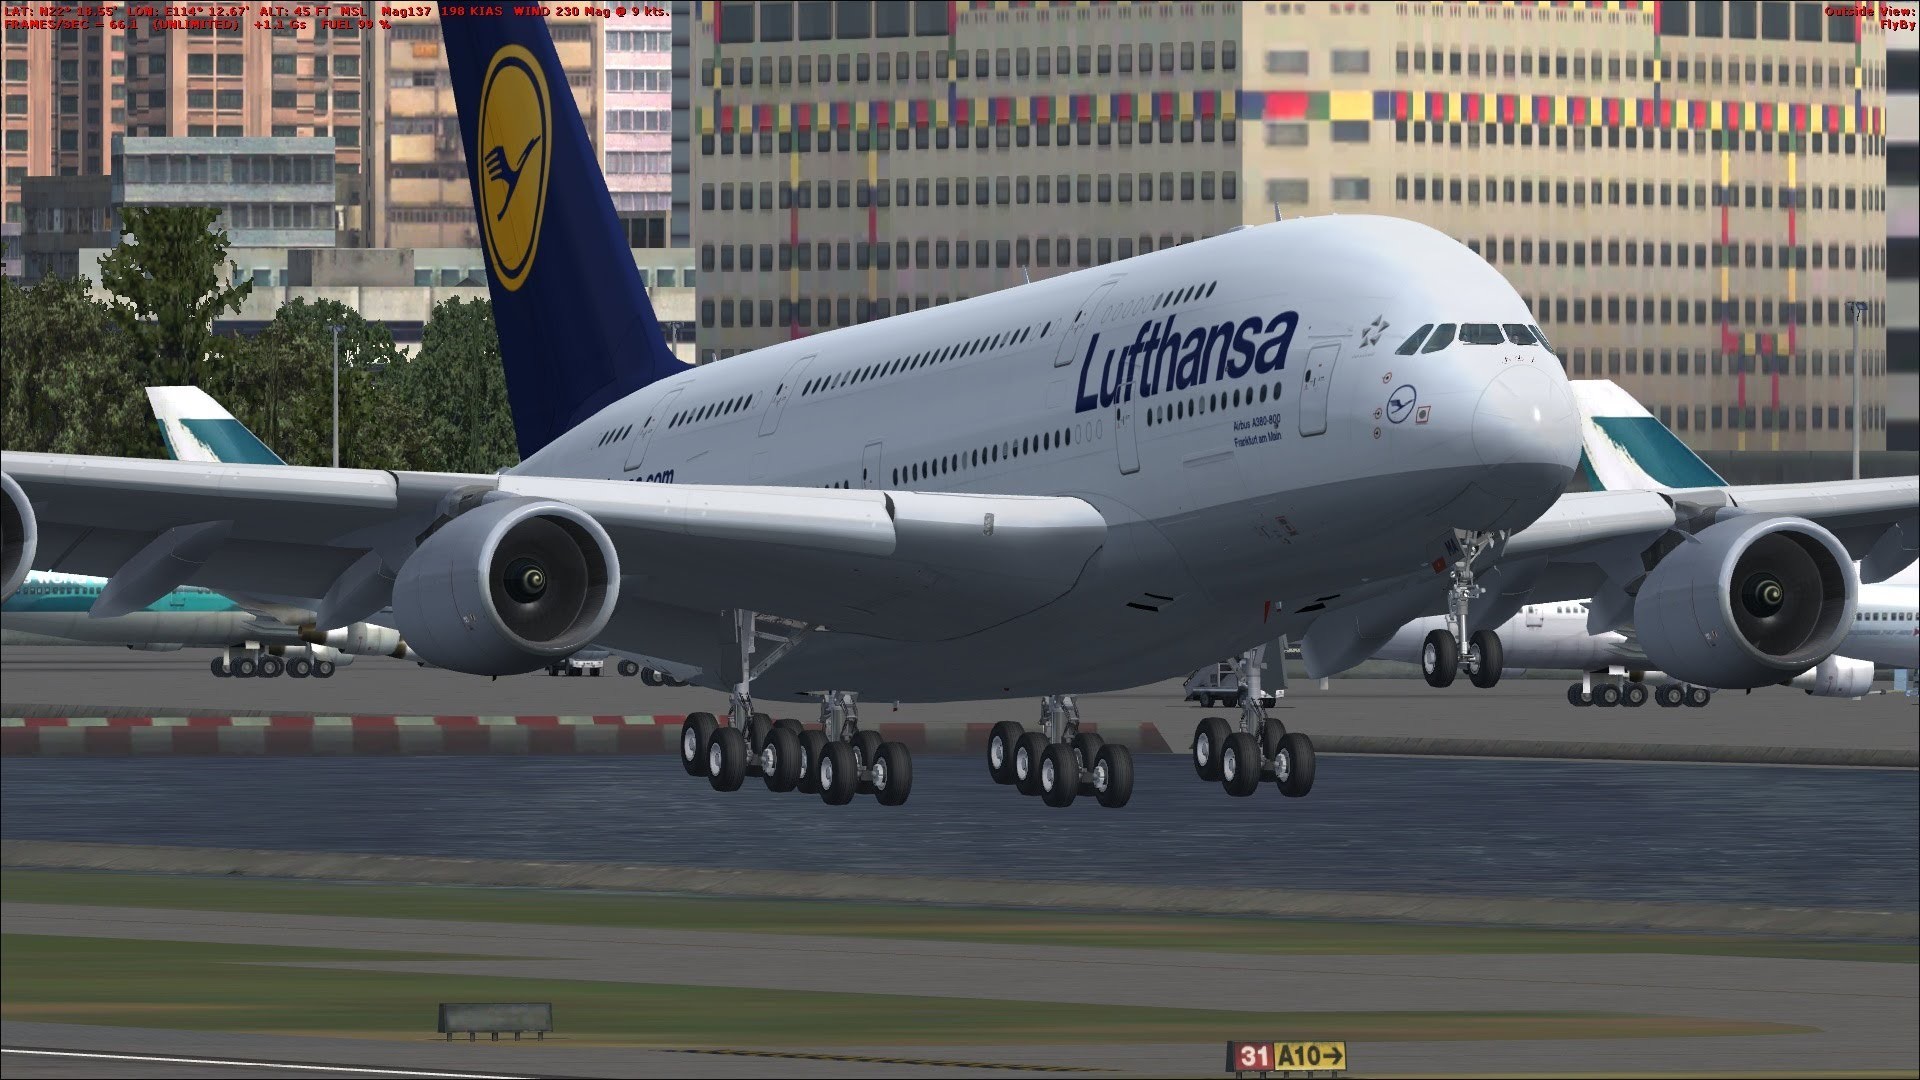 1920x1080 A380 lufthansa